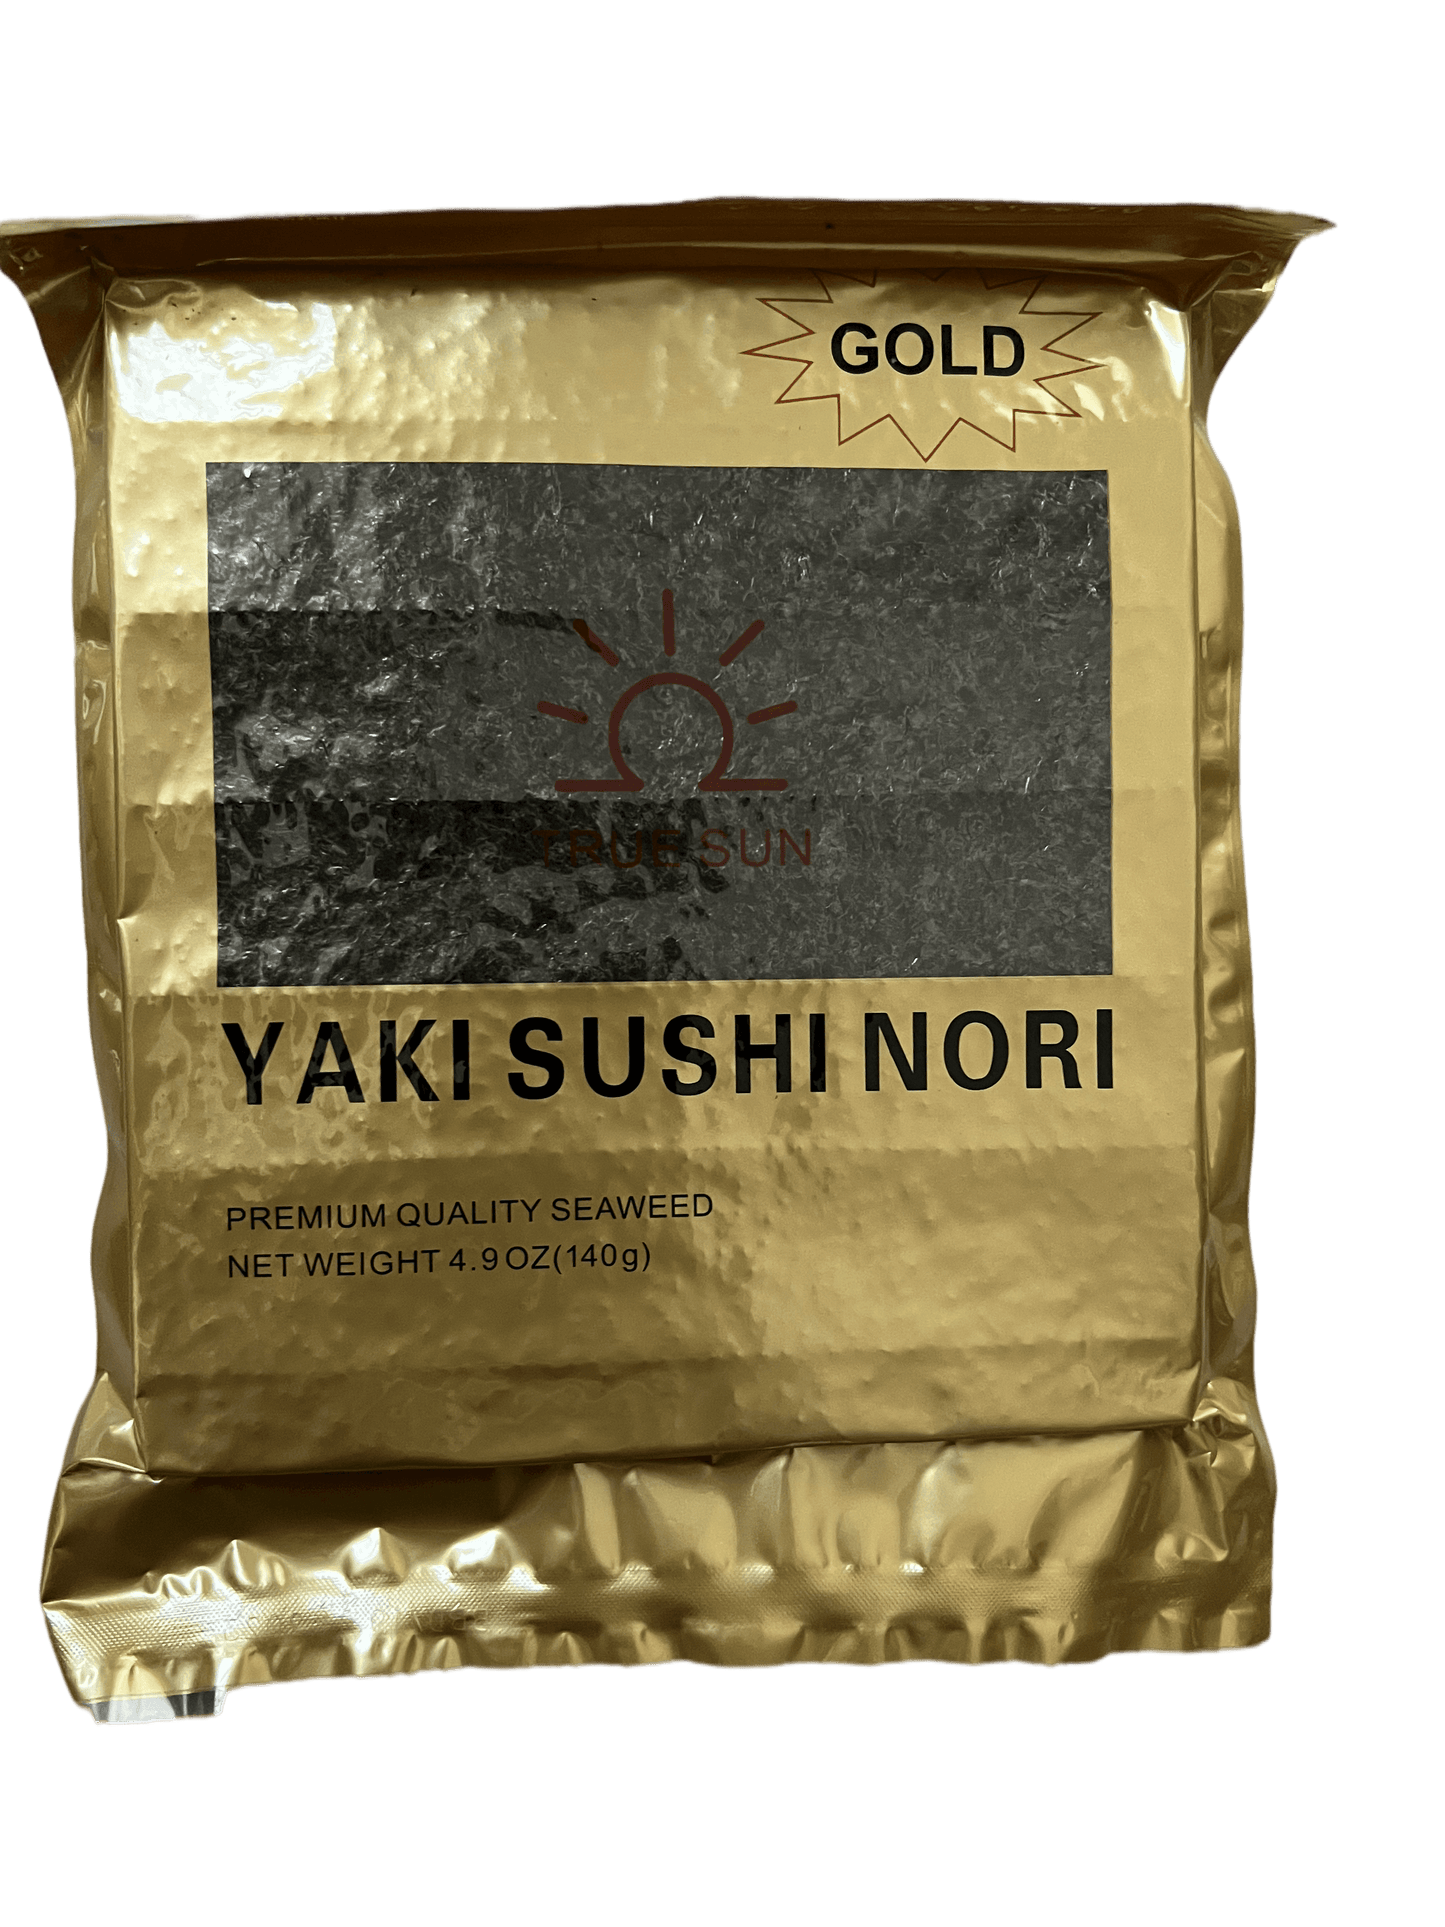 Buy 7 get 1 free True Sun Sushi Nori Premium Gold, Full Sheet ,50 pieces/bag, 80 bags/carton - True Sun